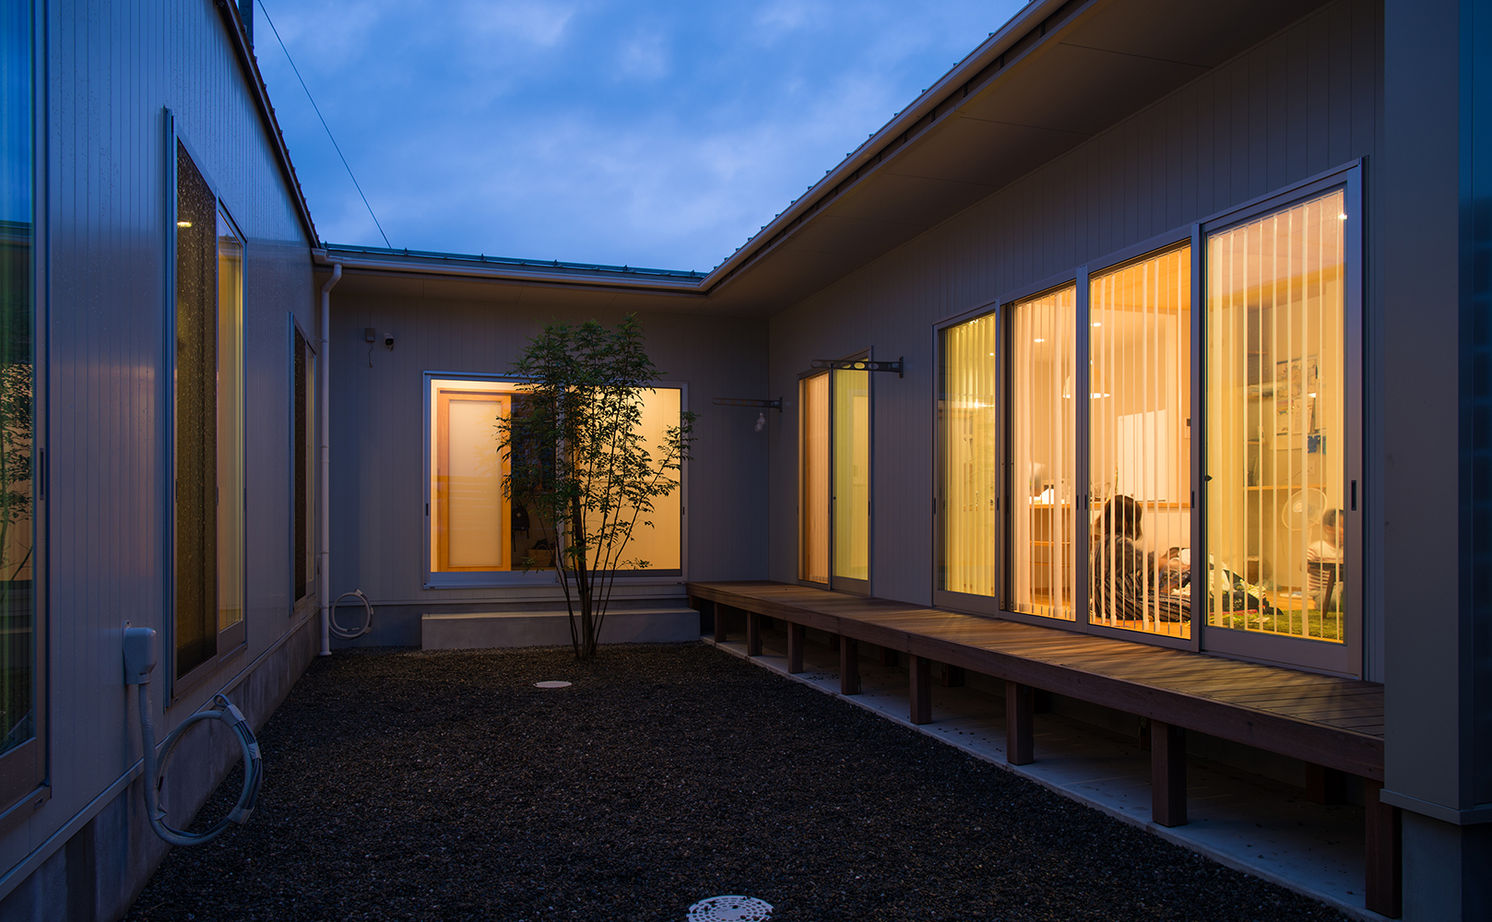 Suumo 平屋 コの字レイアウト 自然素材 Ldkと中庭を挟んだ居室レイアウトは生活音が伝わらないメリットも すみ家 の建築実例詳細 注文住宅